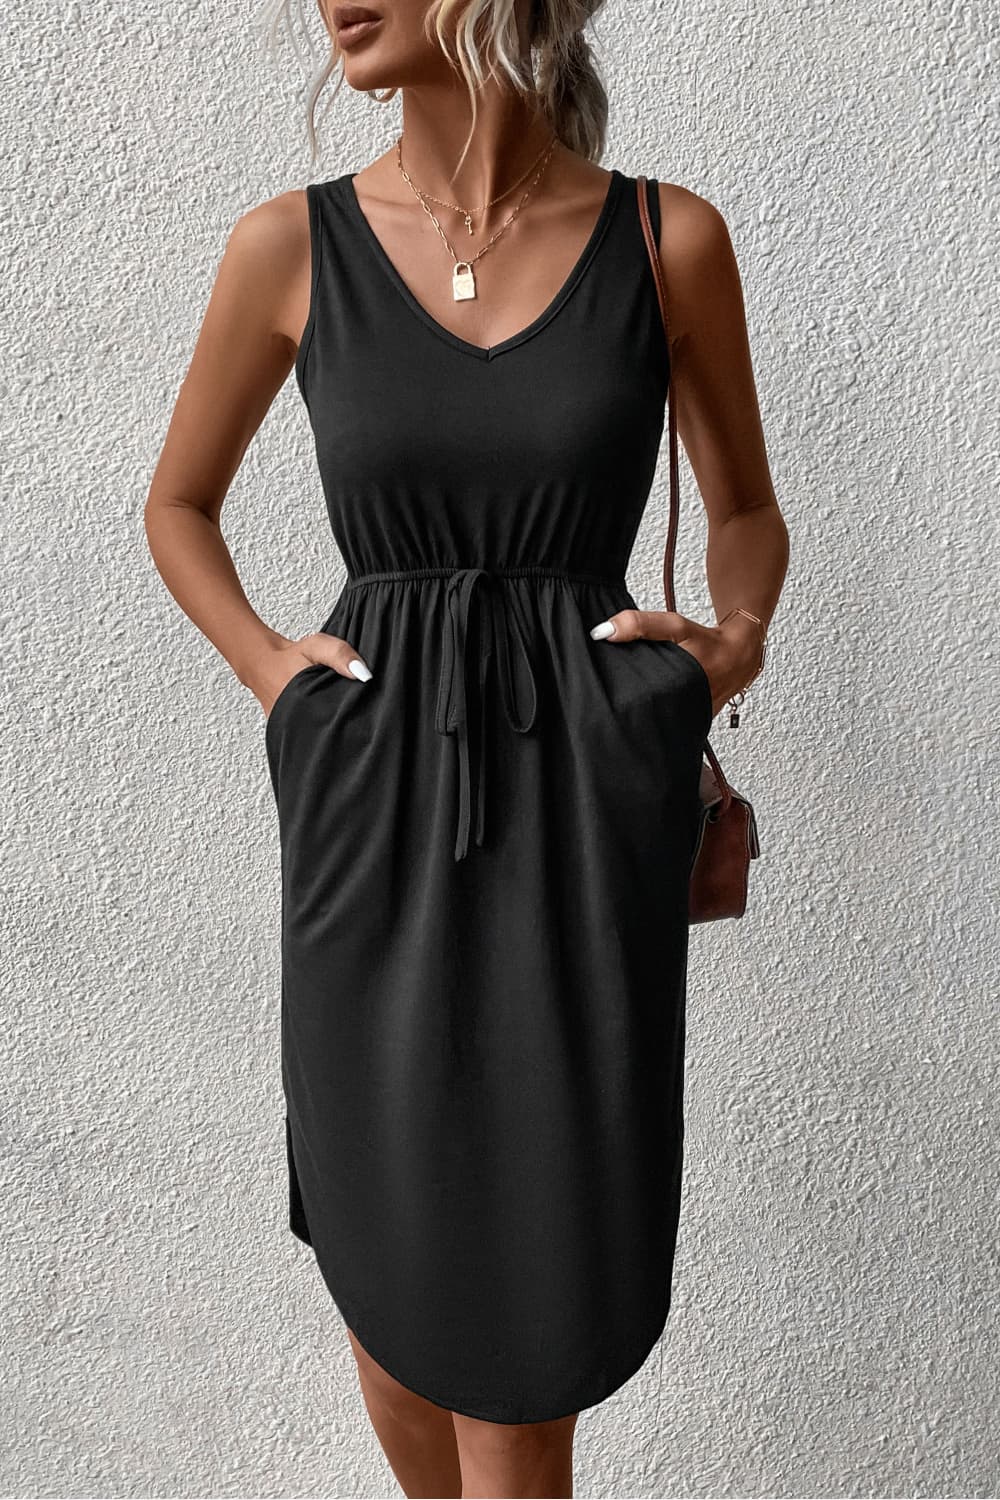 V-Neck Curved Hem Sleeveless Dress (6 Colors)  Krazy Heart Designs Boutique Black S 